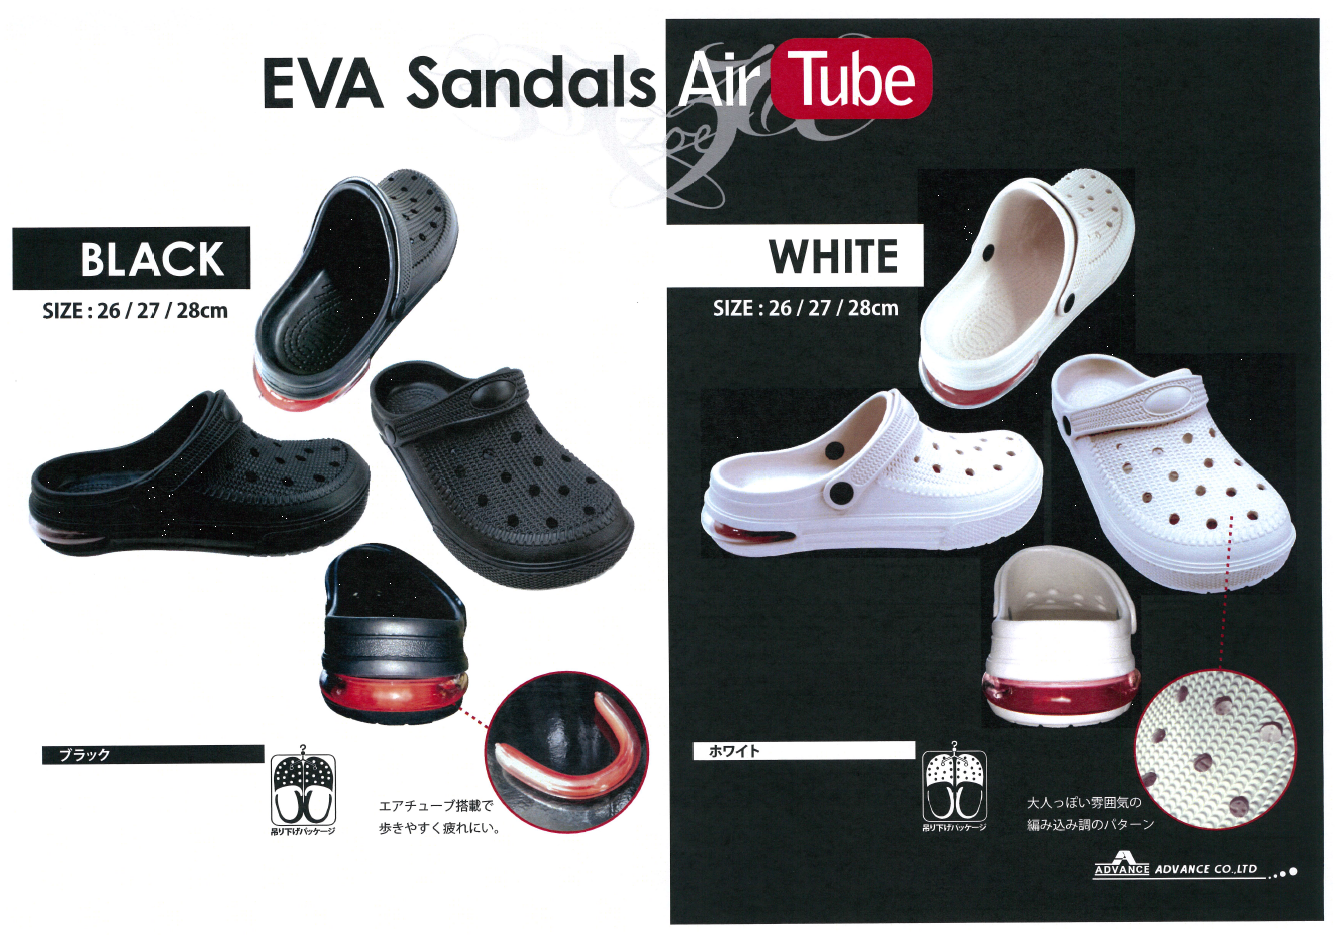  EVA Sandals Air Tube